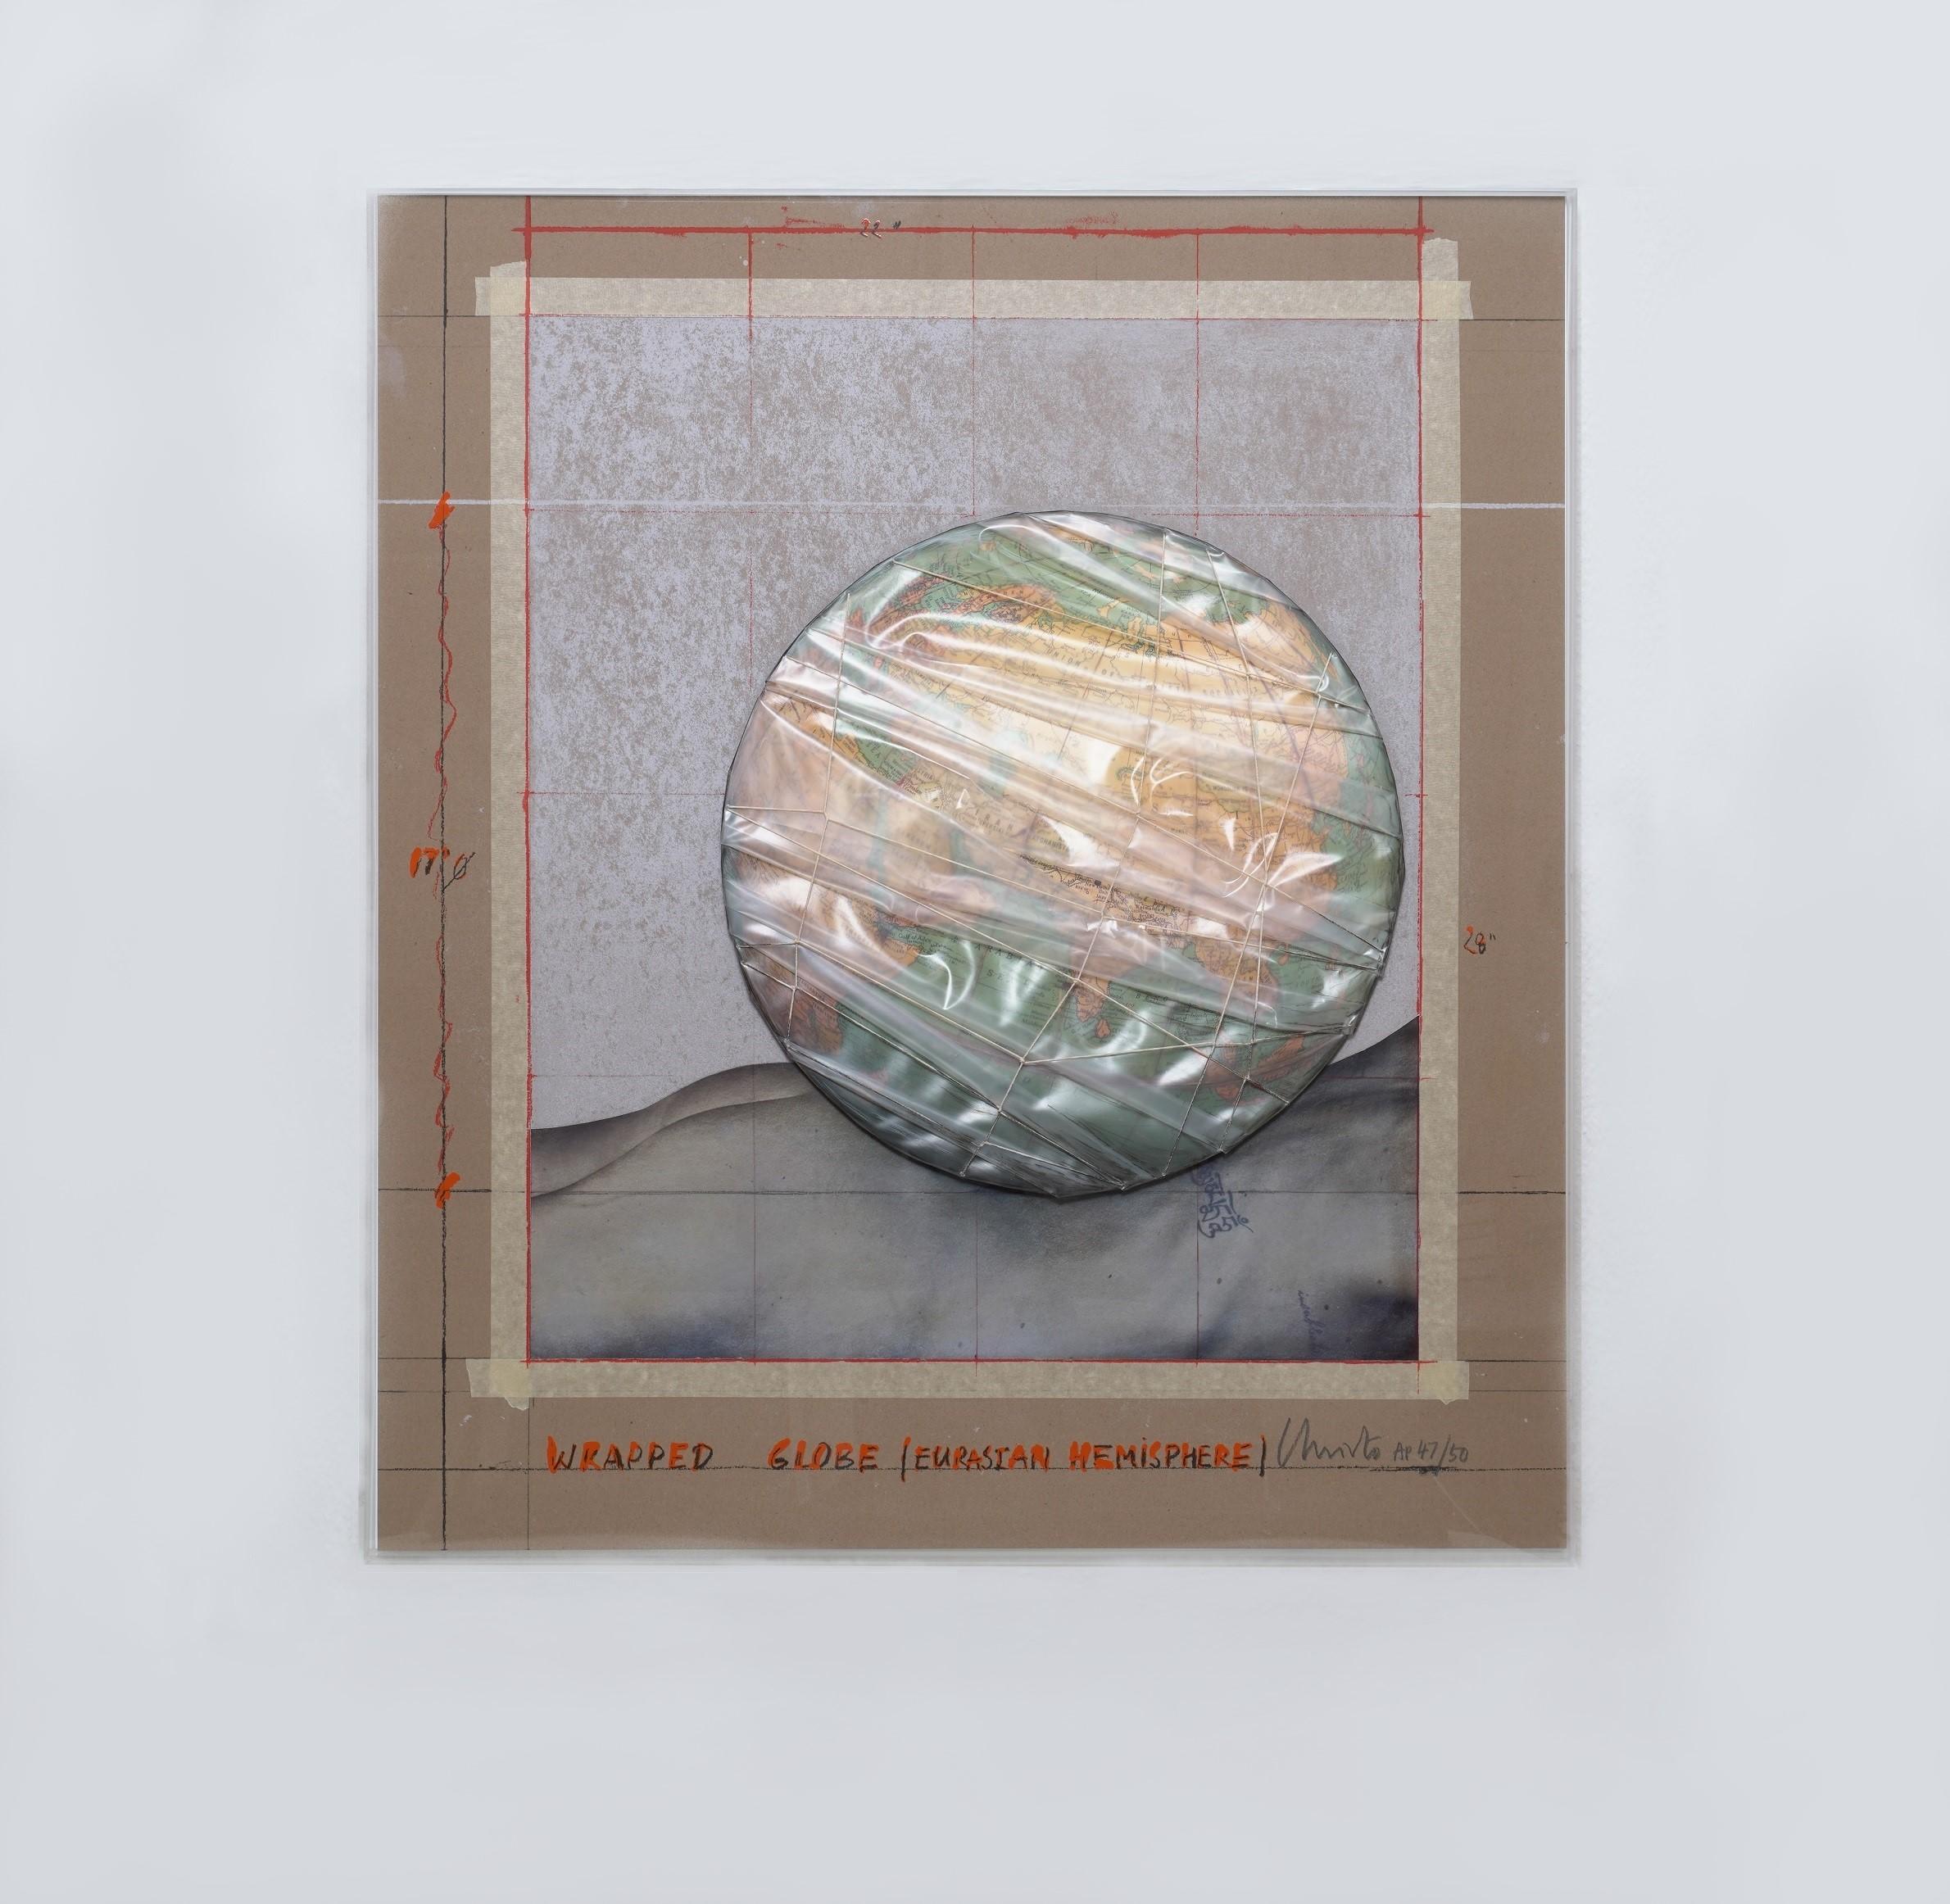 Wrapped Globe (Eurasian Hemisphere)–Christo, Contemporary, Limited Edition 2